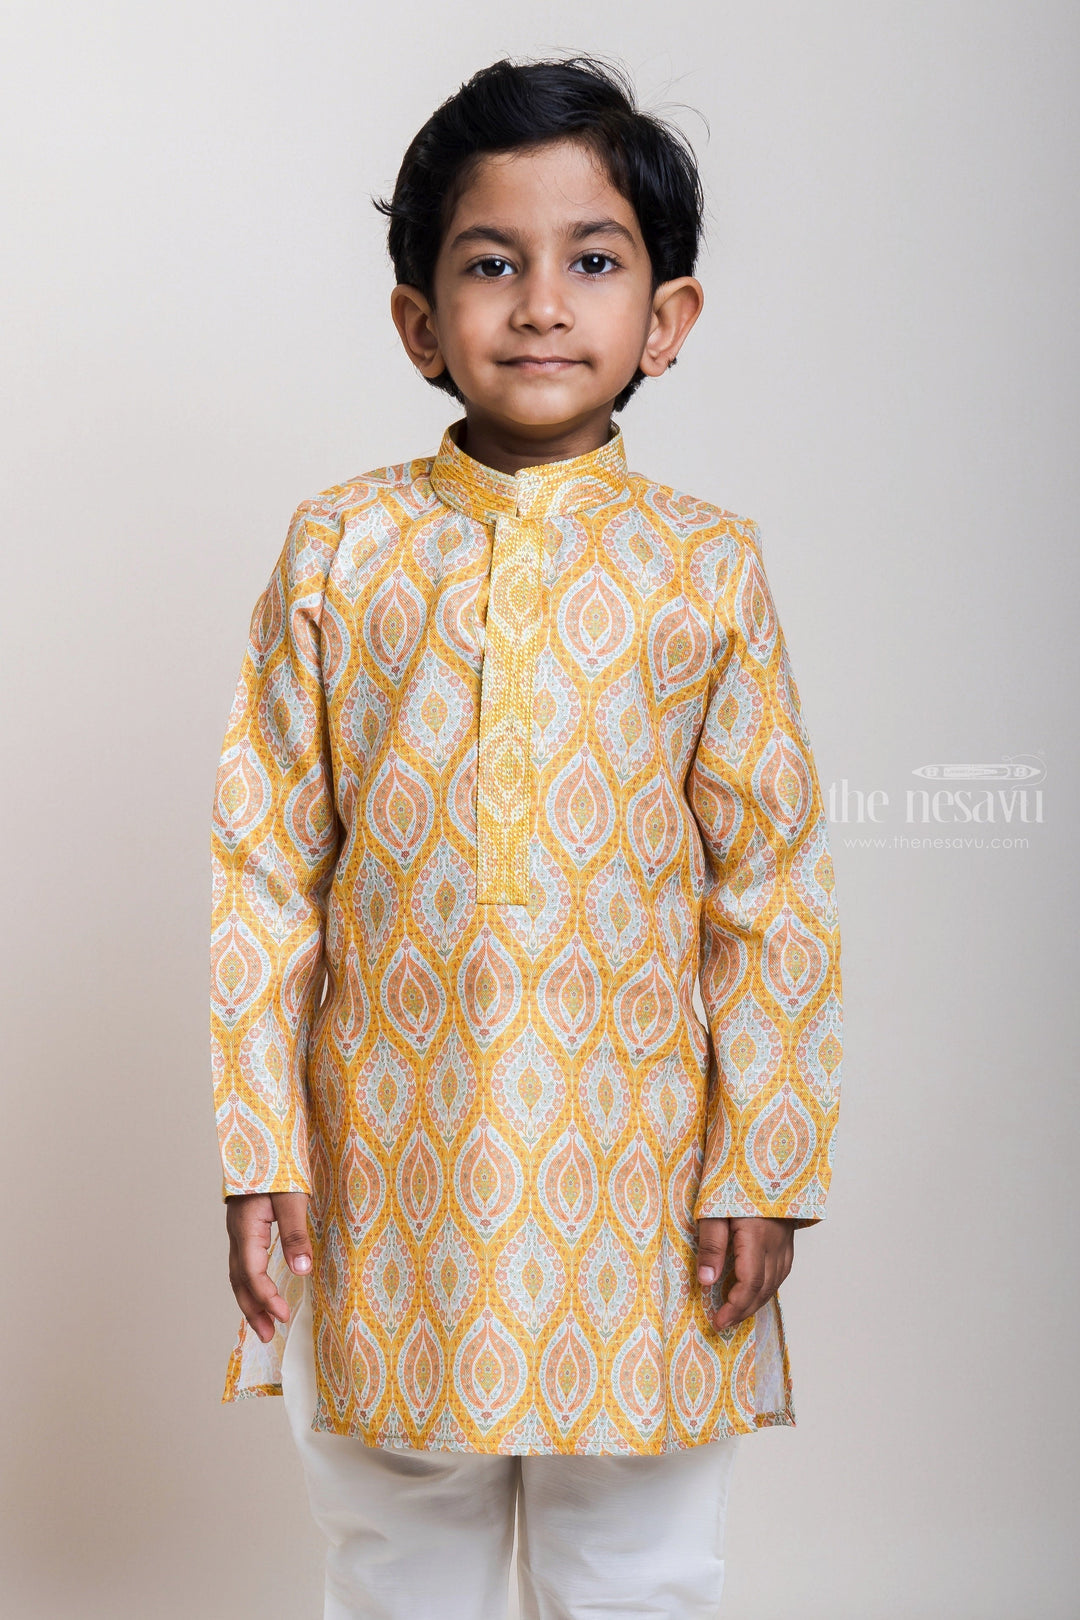 The Nesavu Boys Kurtha Set Latest Printed Yellow Cotton Kurta With Elastic Pyjama For Little Boys Nesavu Best Ethnic Wear Collection For Boys| Exclusive Designs| The Nesavu